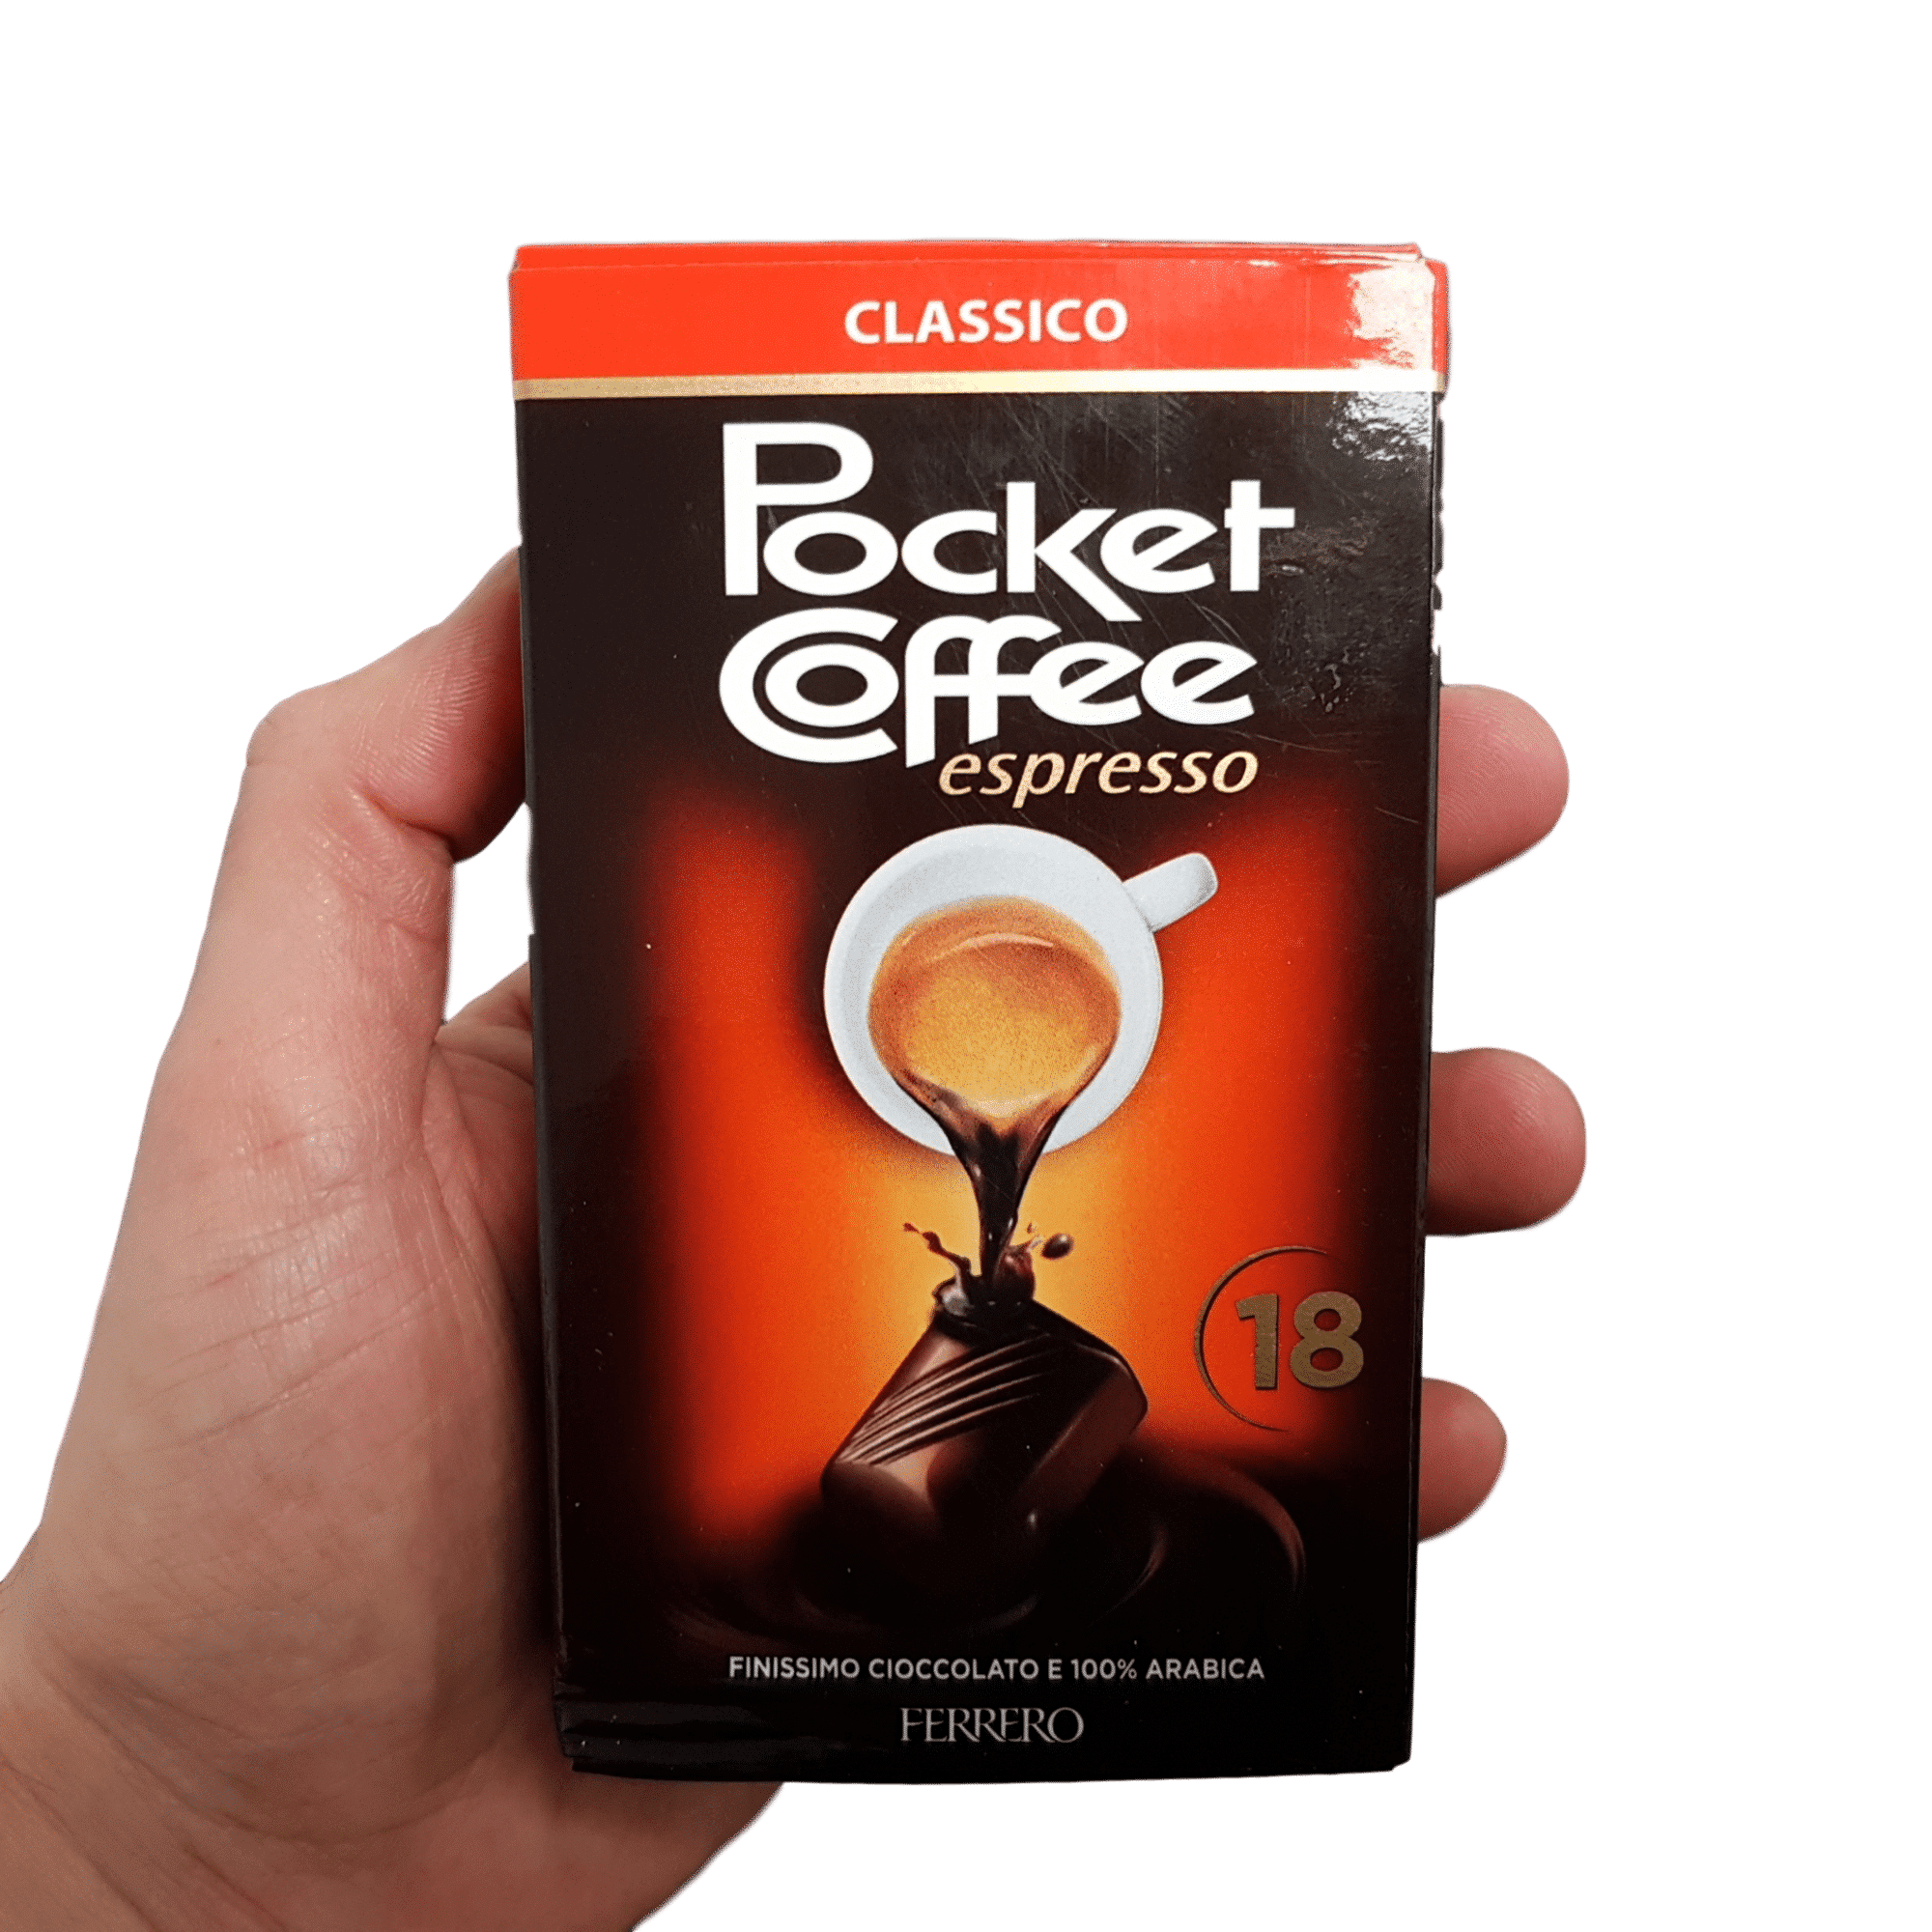 Ferrero: Pocket Coffee Espresso, 18 pcs 225gr (7.93oz) “Imported